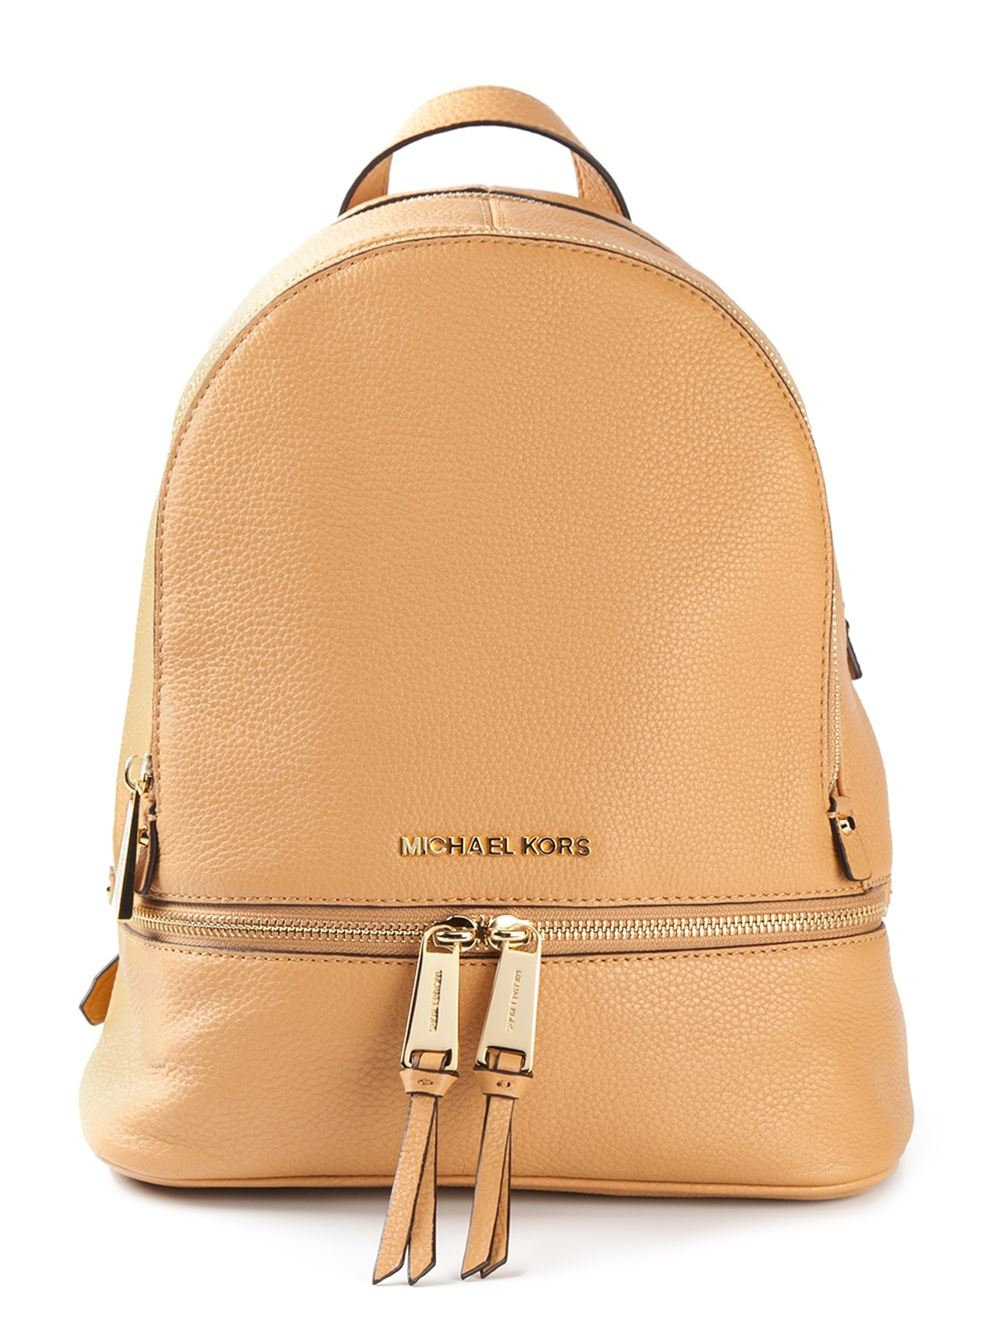 Louis Vuitton Backpack Skroutz, Buy Now, Flash Sales, 59% OFF,  www.busformentera.com